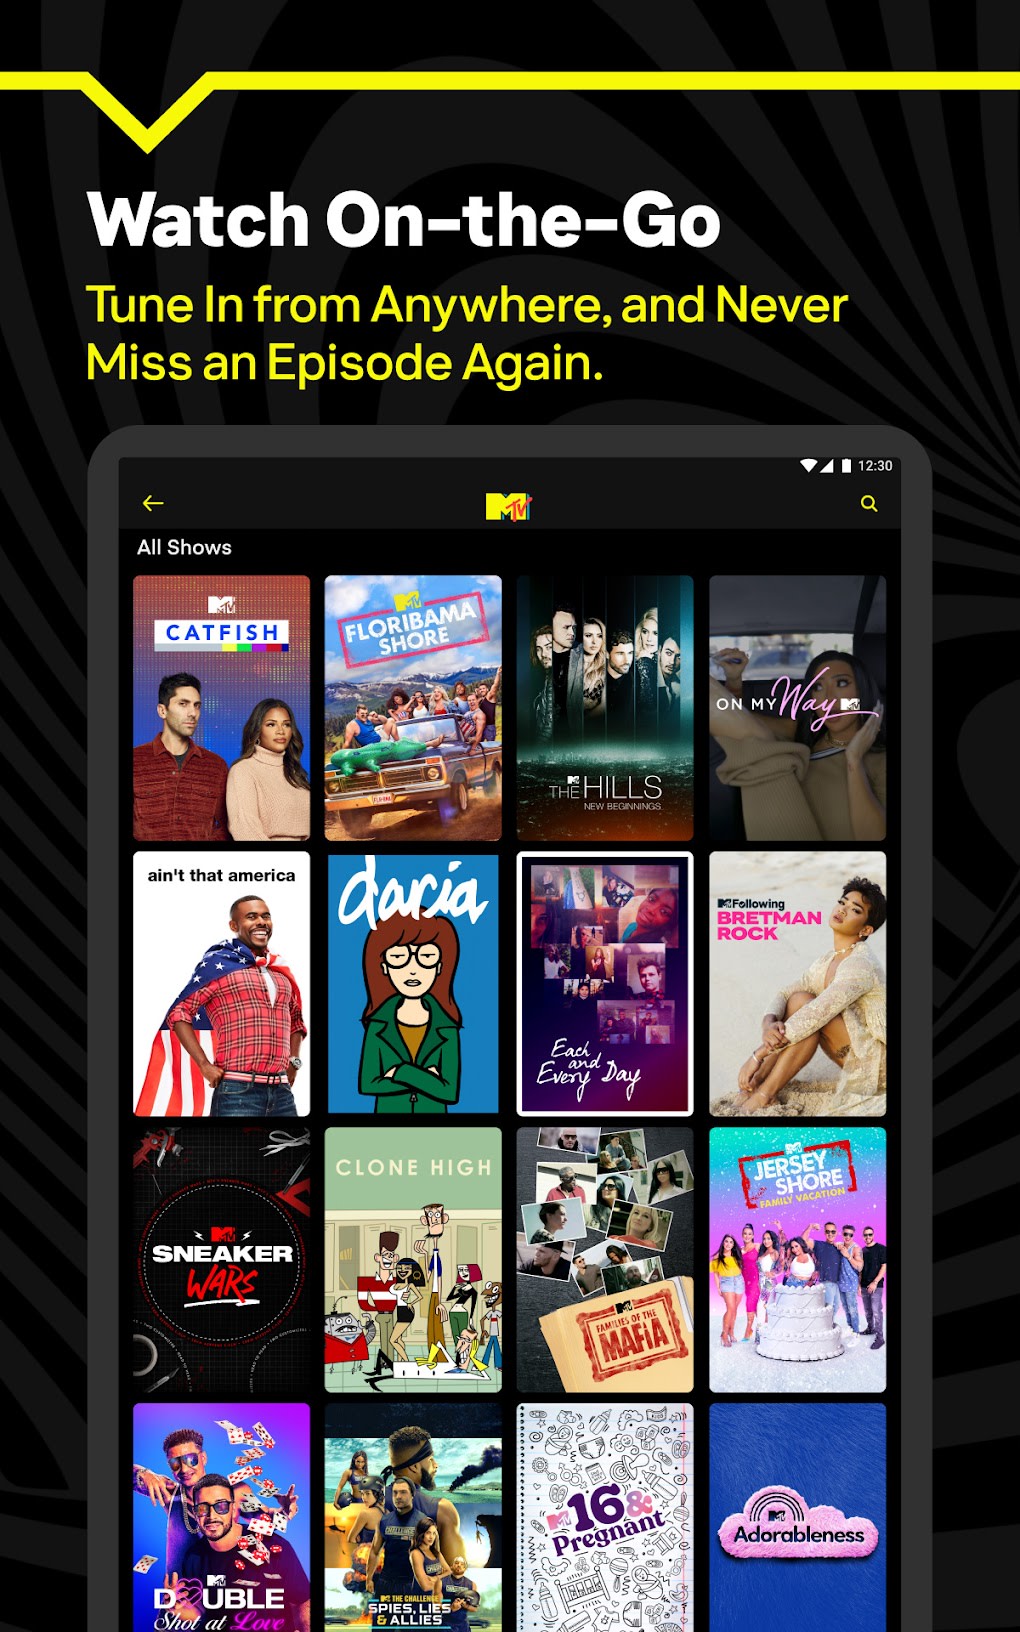 MTV Mod apk download - MTV MOD apk free for Android.